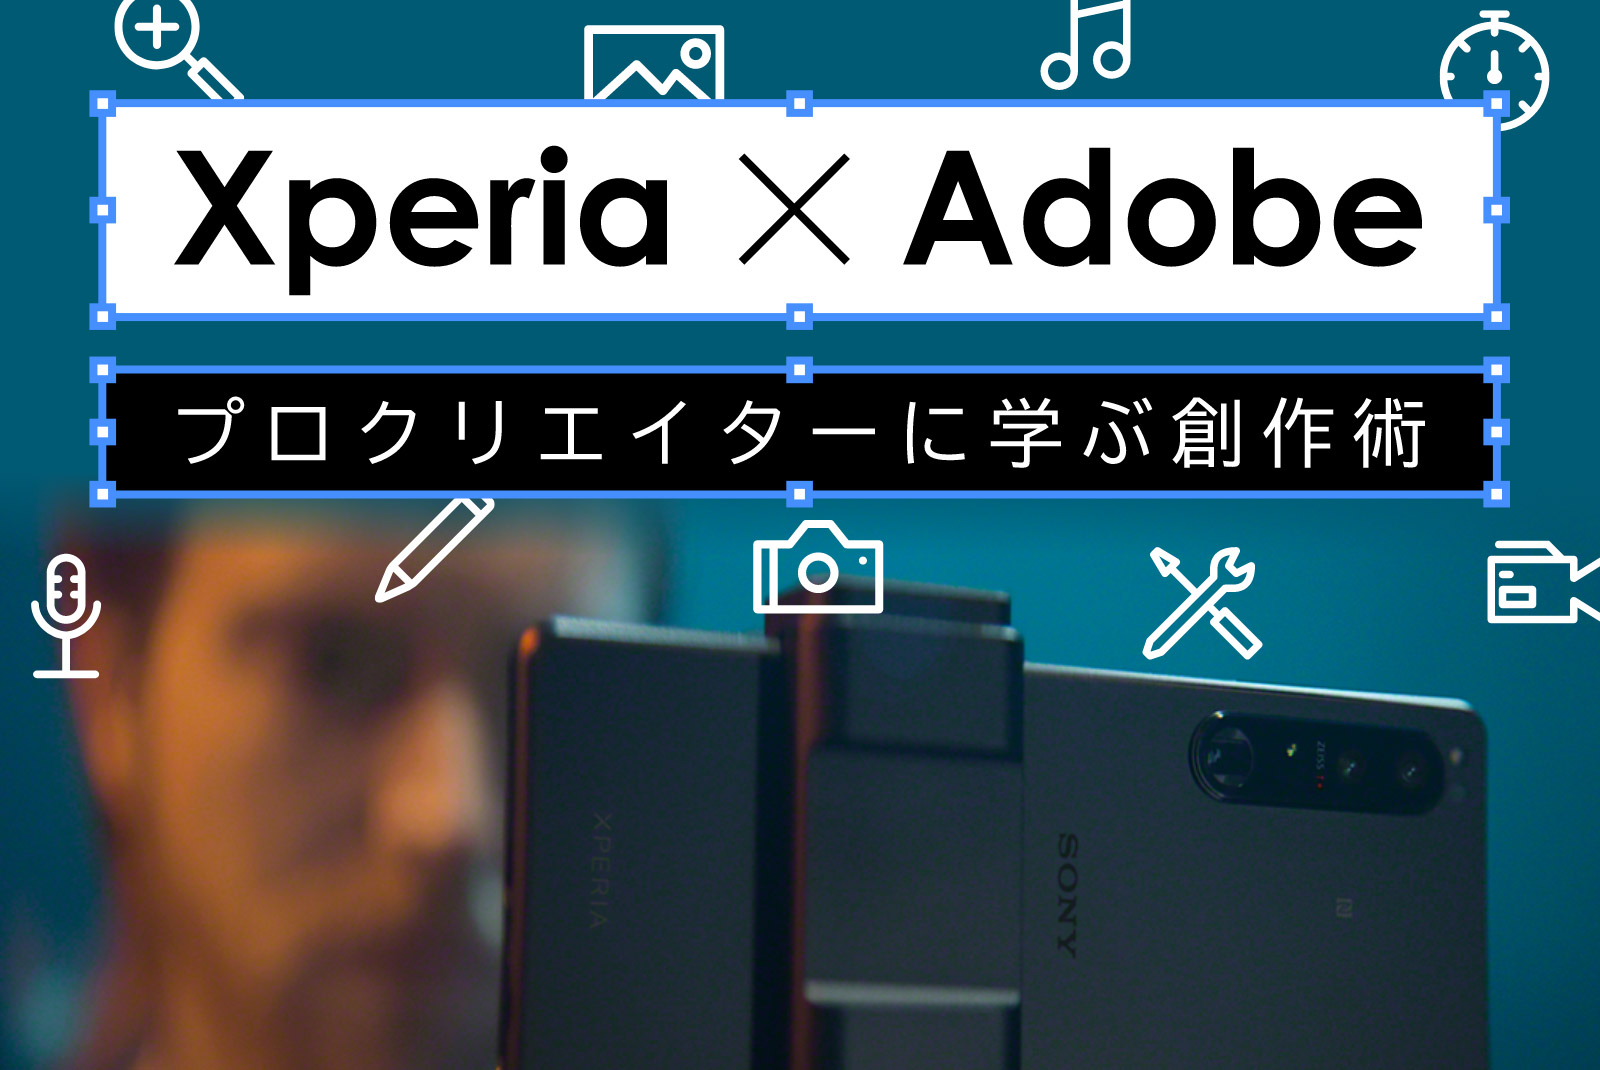 Xperia × Adobe プロクリエイターに学ぶ創作術